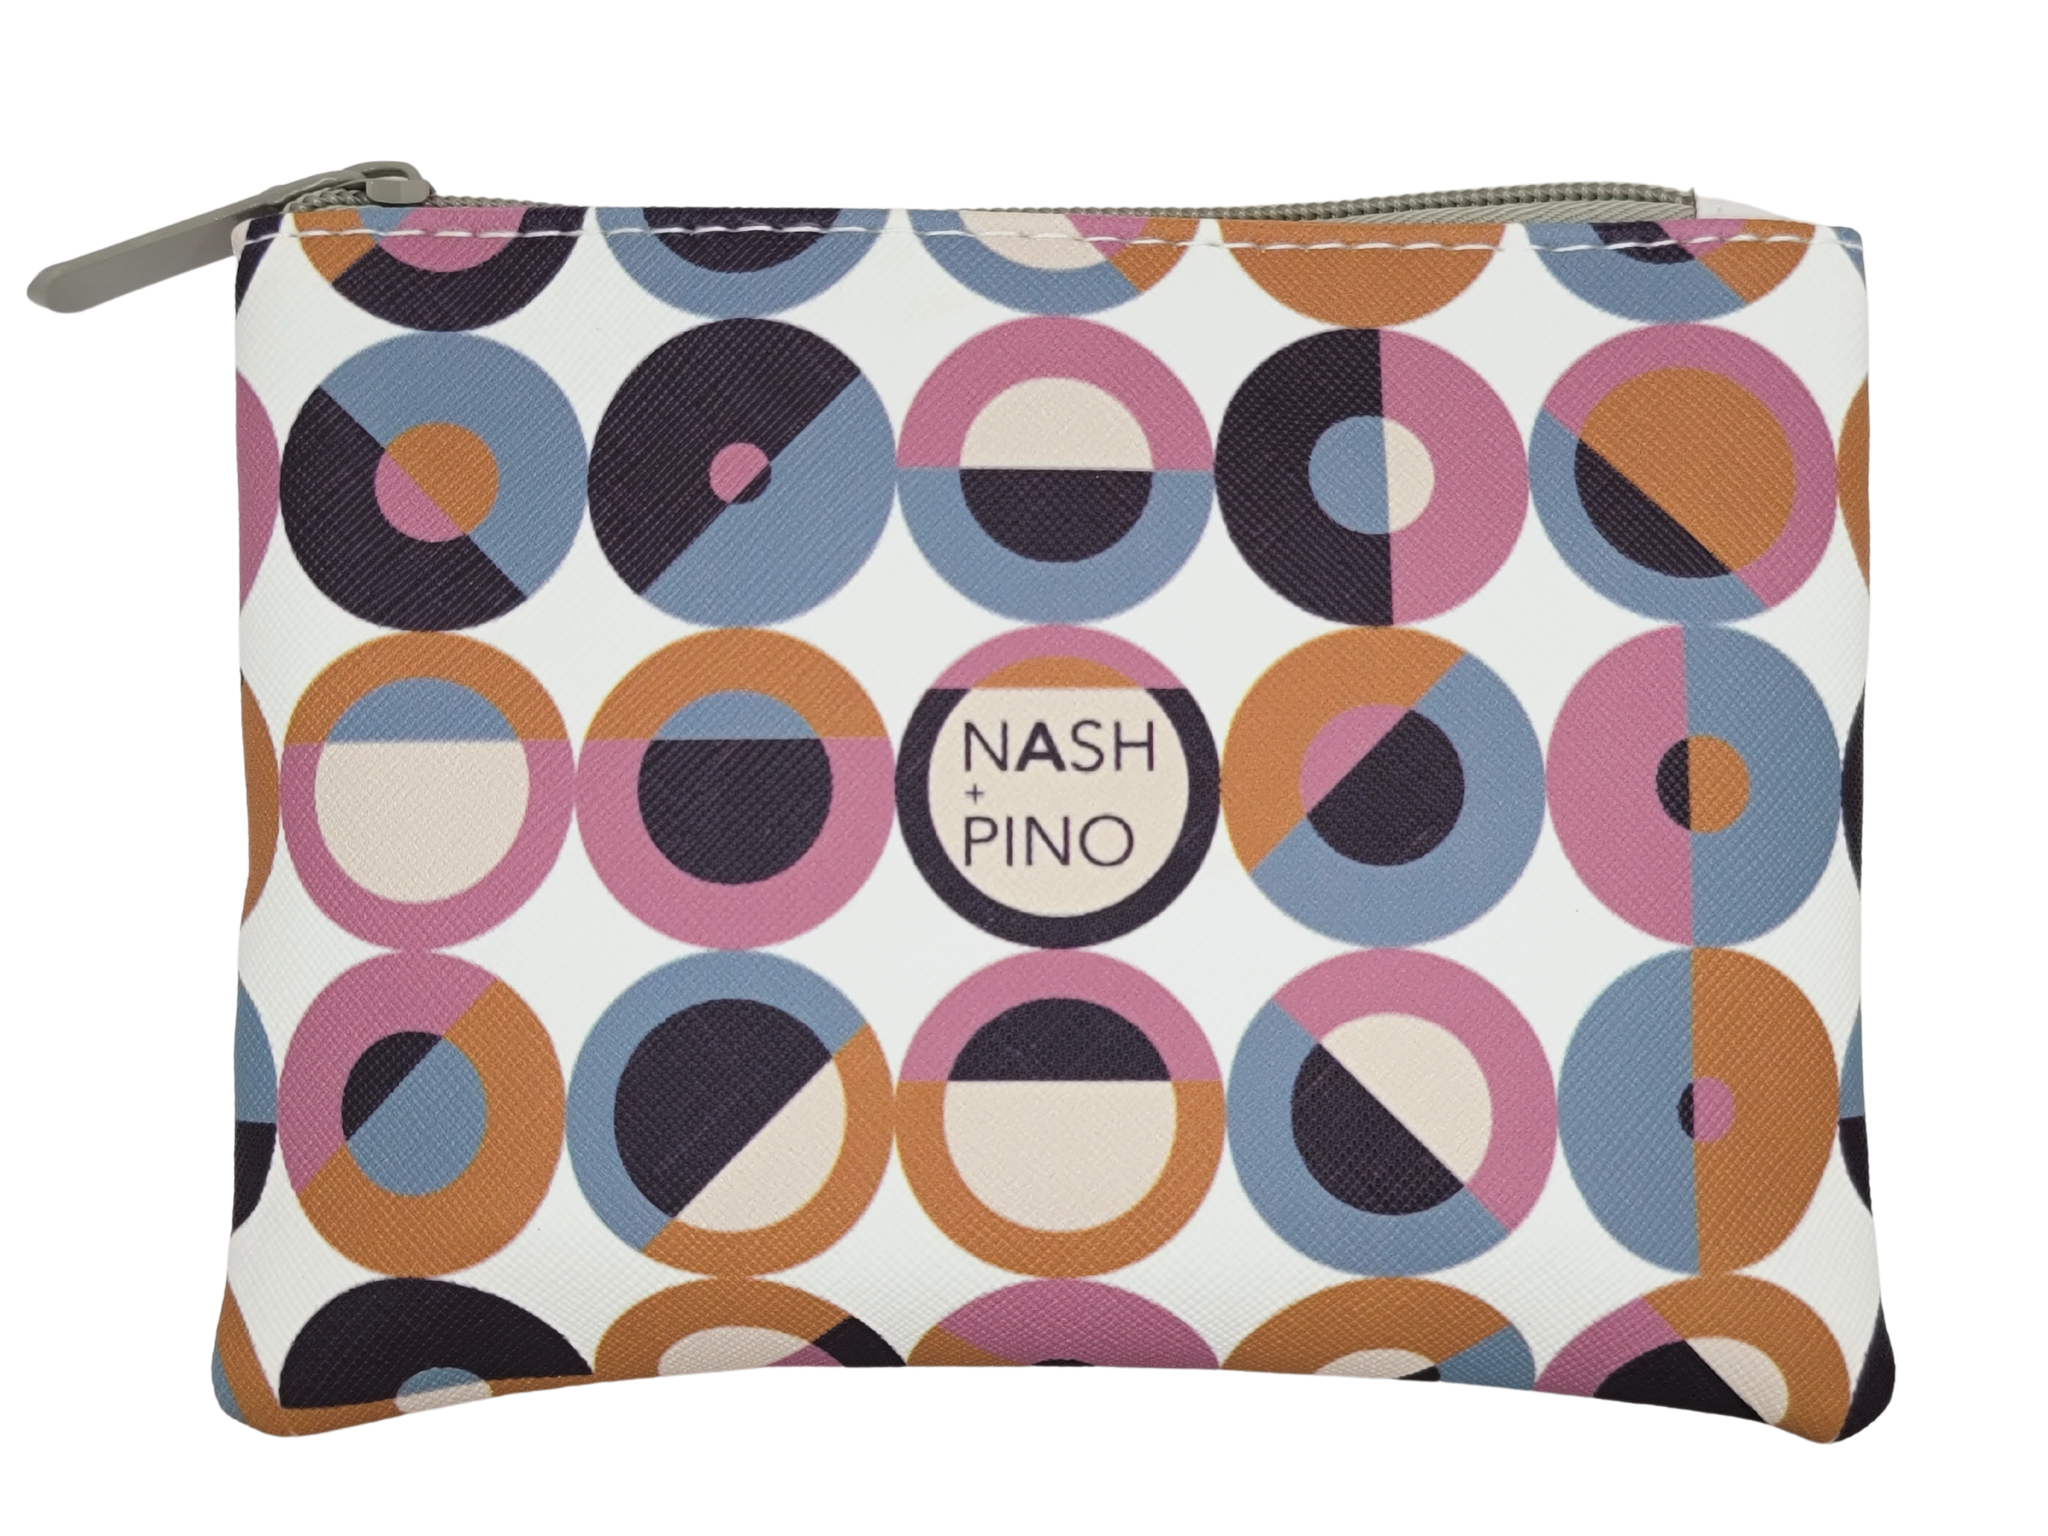 NASH + PINO Vegan Leather Pouch